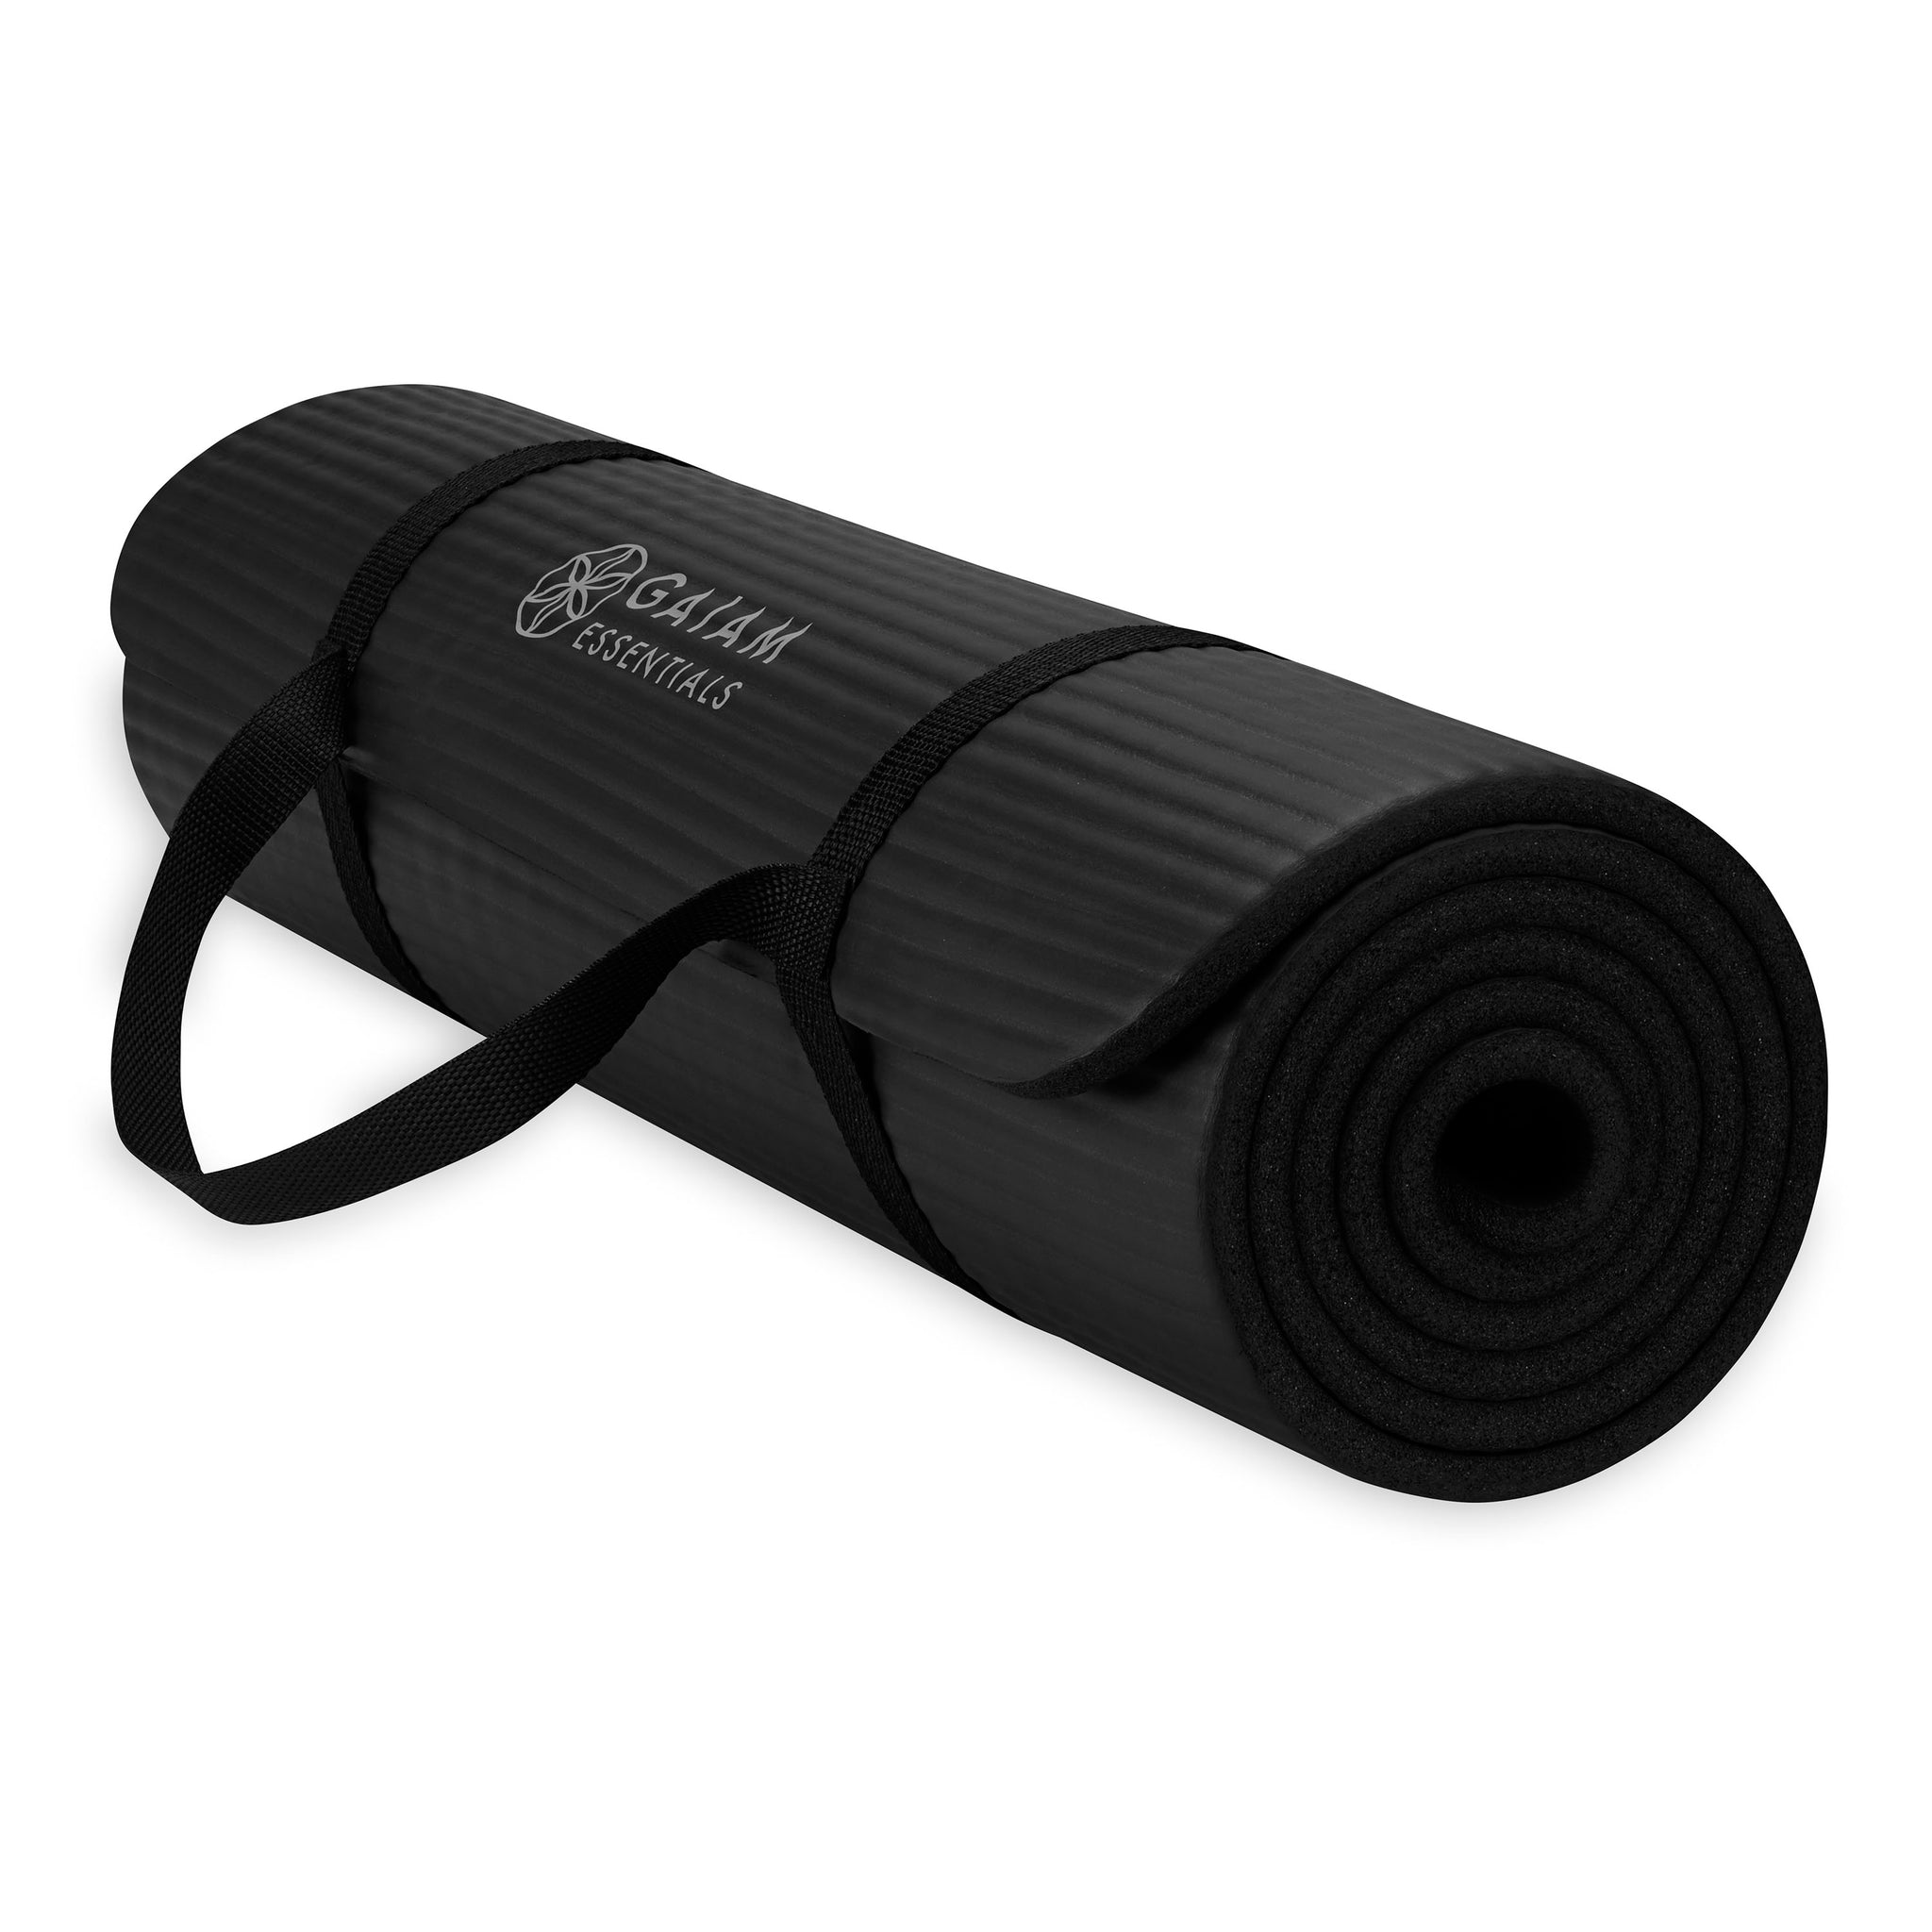 Sports/Fitness: Gaiam Yoga Mat Carrier $10.50 (Reg. $15+), Sports